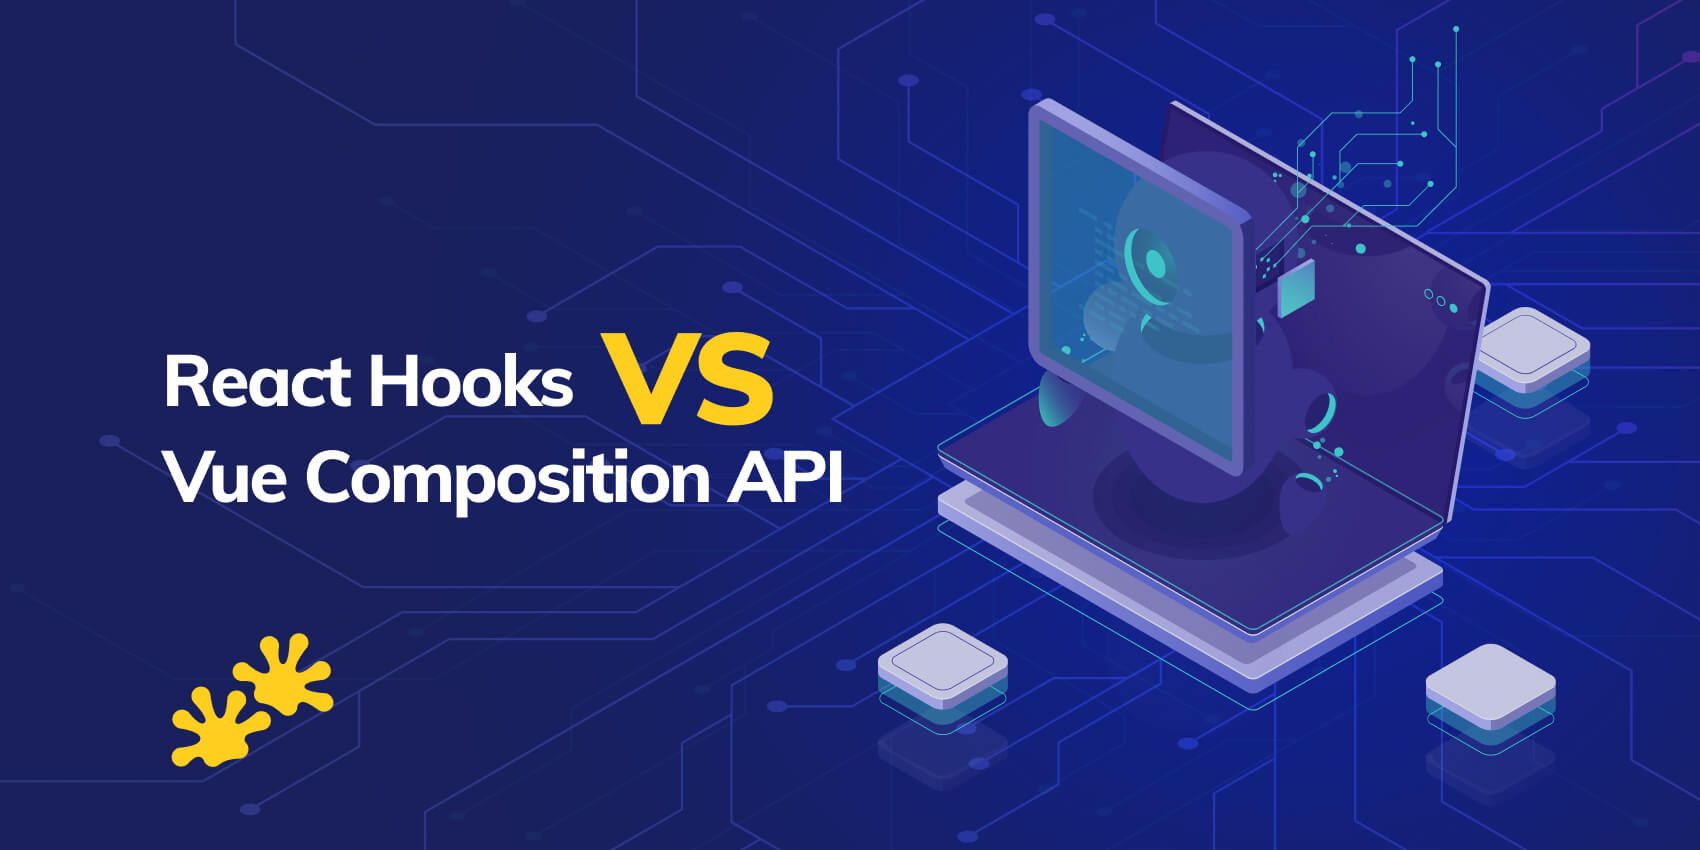 Vue Composition API vs React Hooks